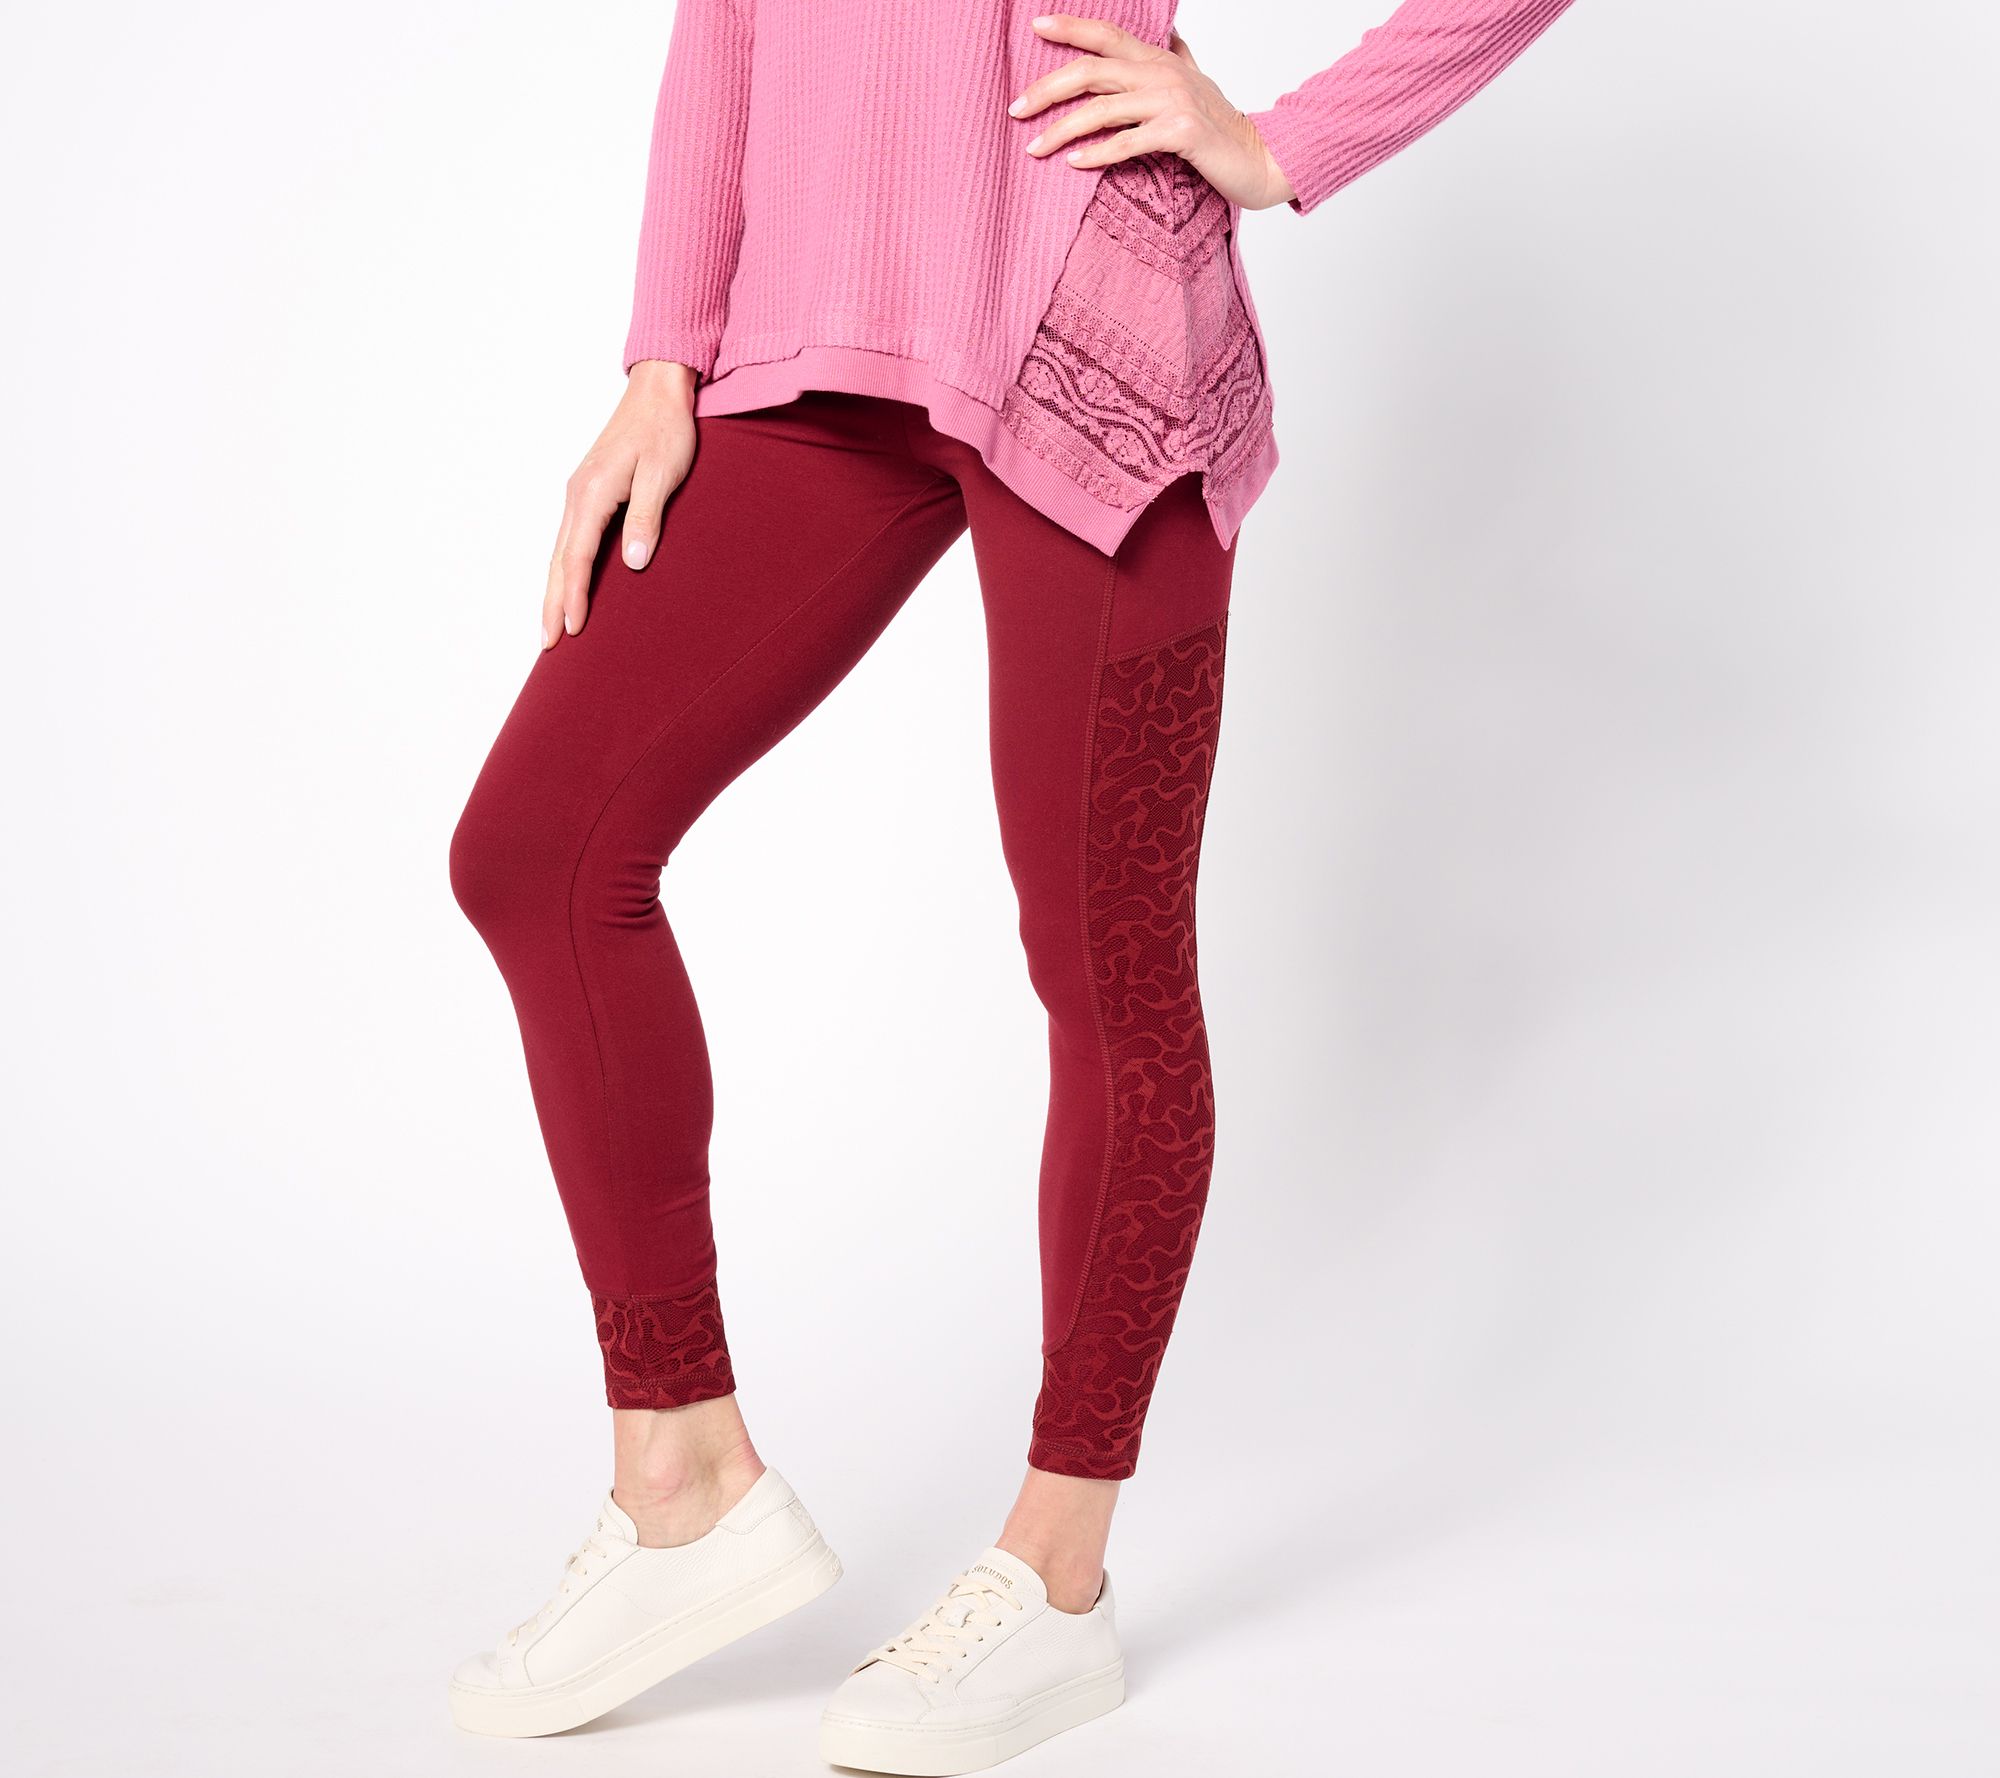 PINK ultimate leggings  Clothes design, Leggings, Victoria secret pink